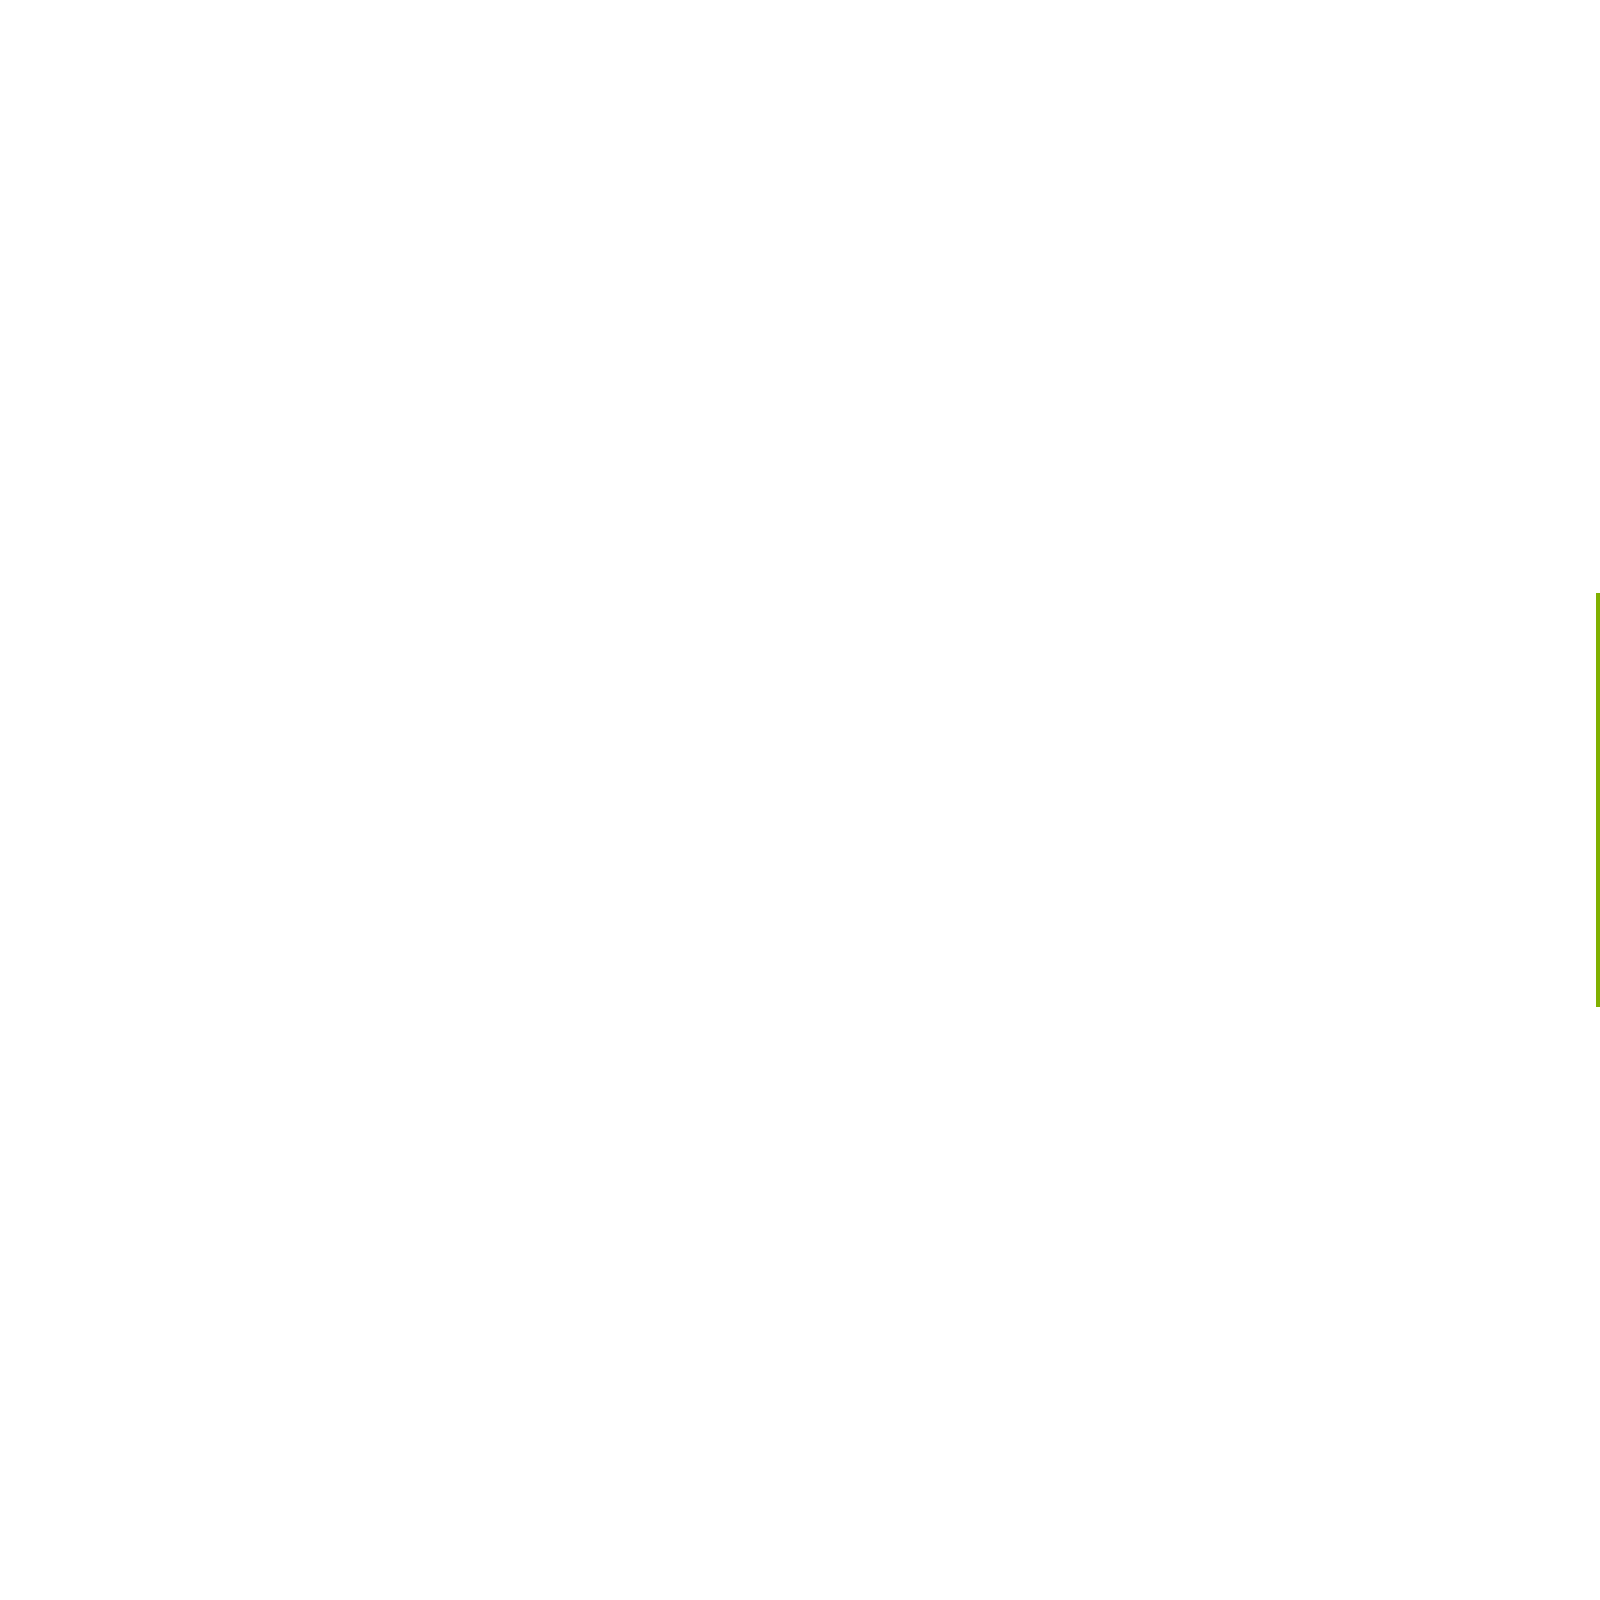 Lockheed Martinv